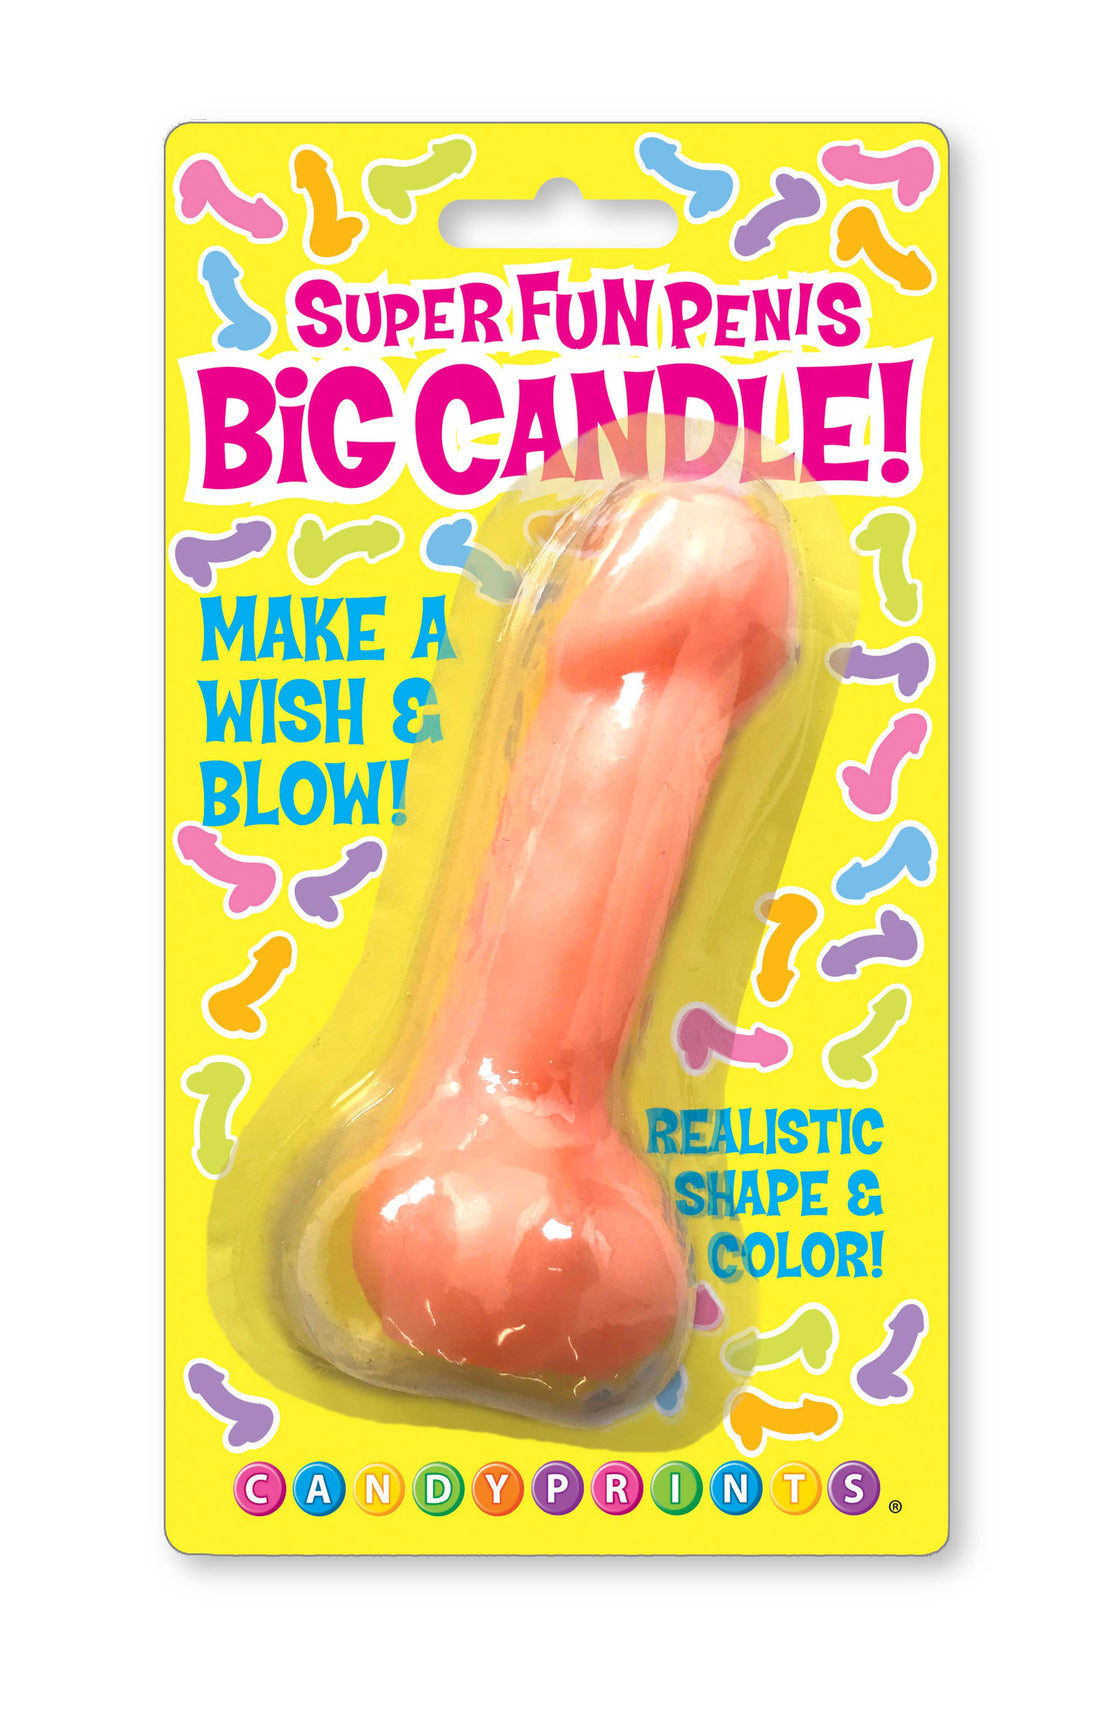 Super Fun Penis Candle